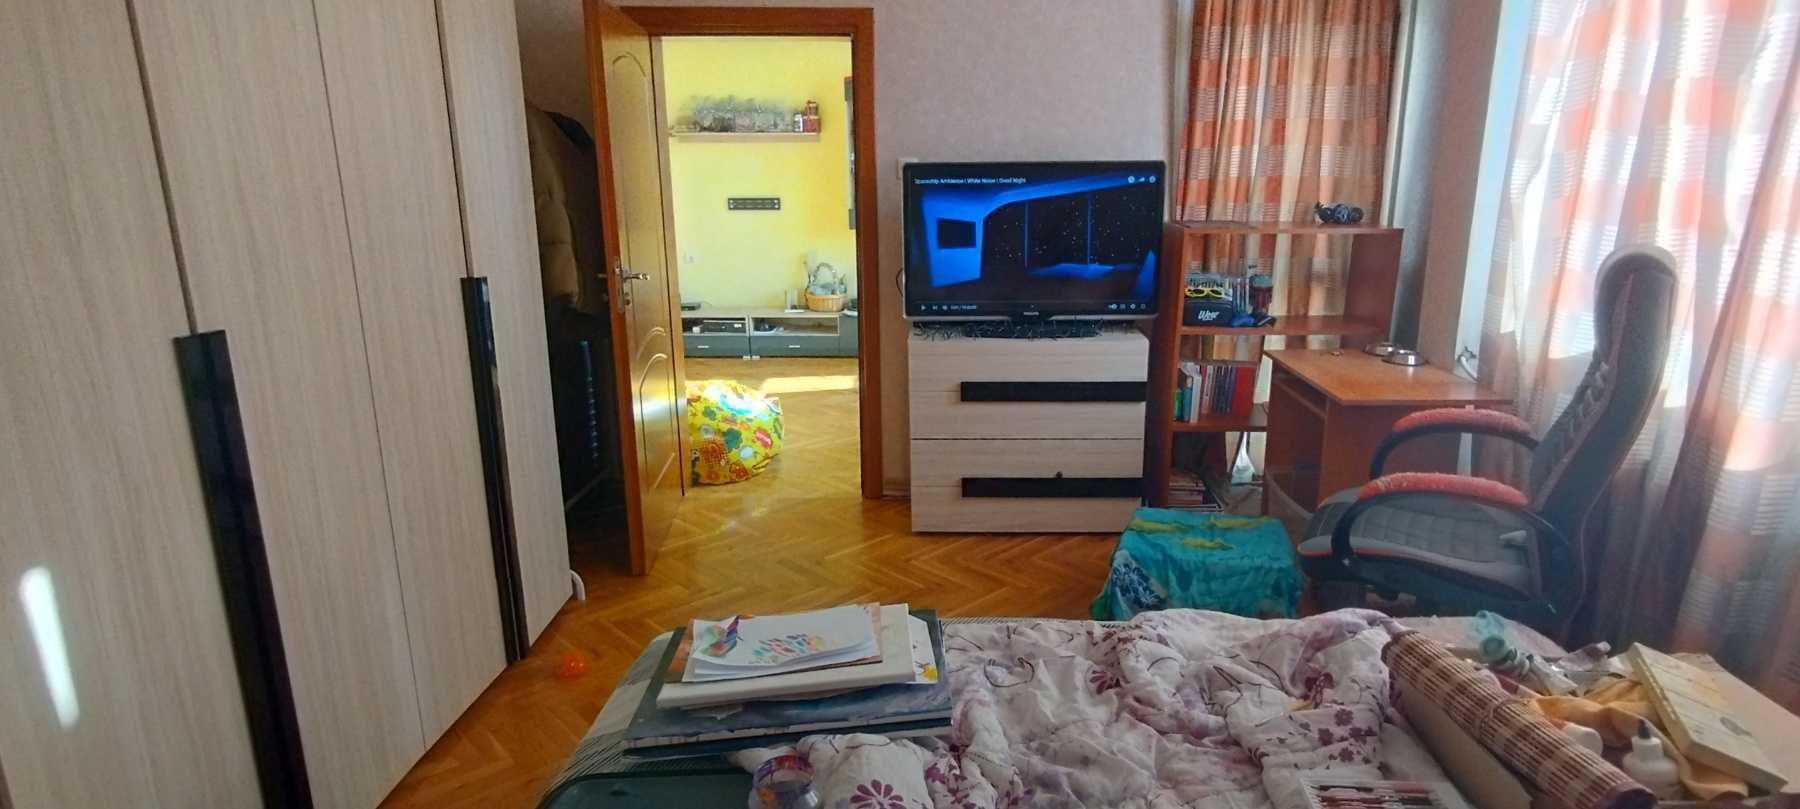 Тристаен апартамент в ж.к. Борово